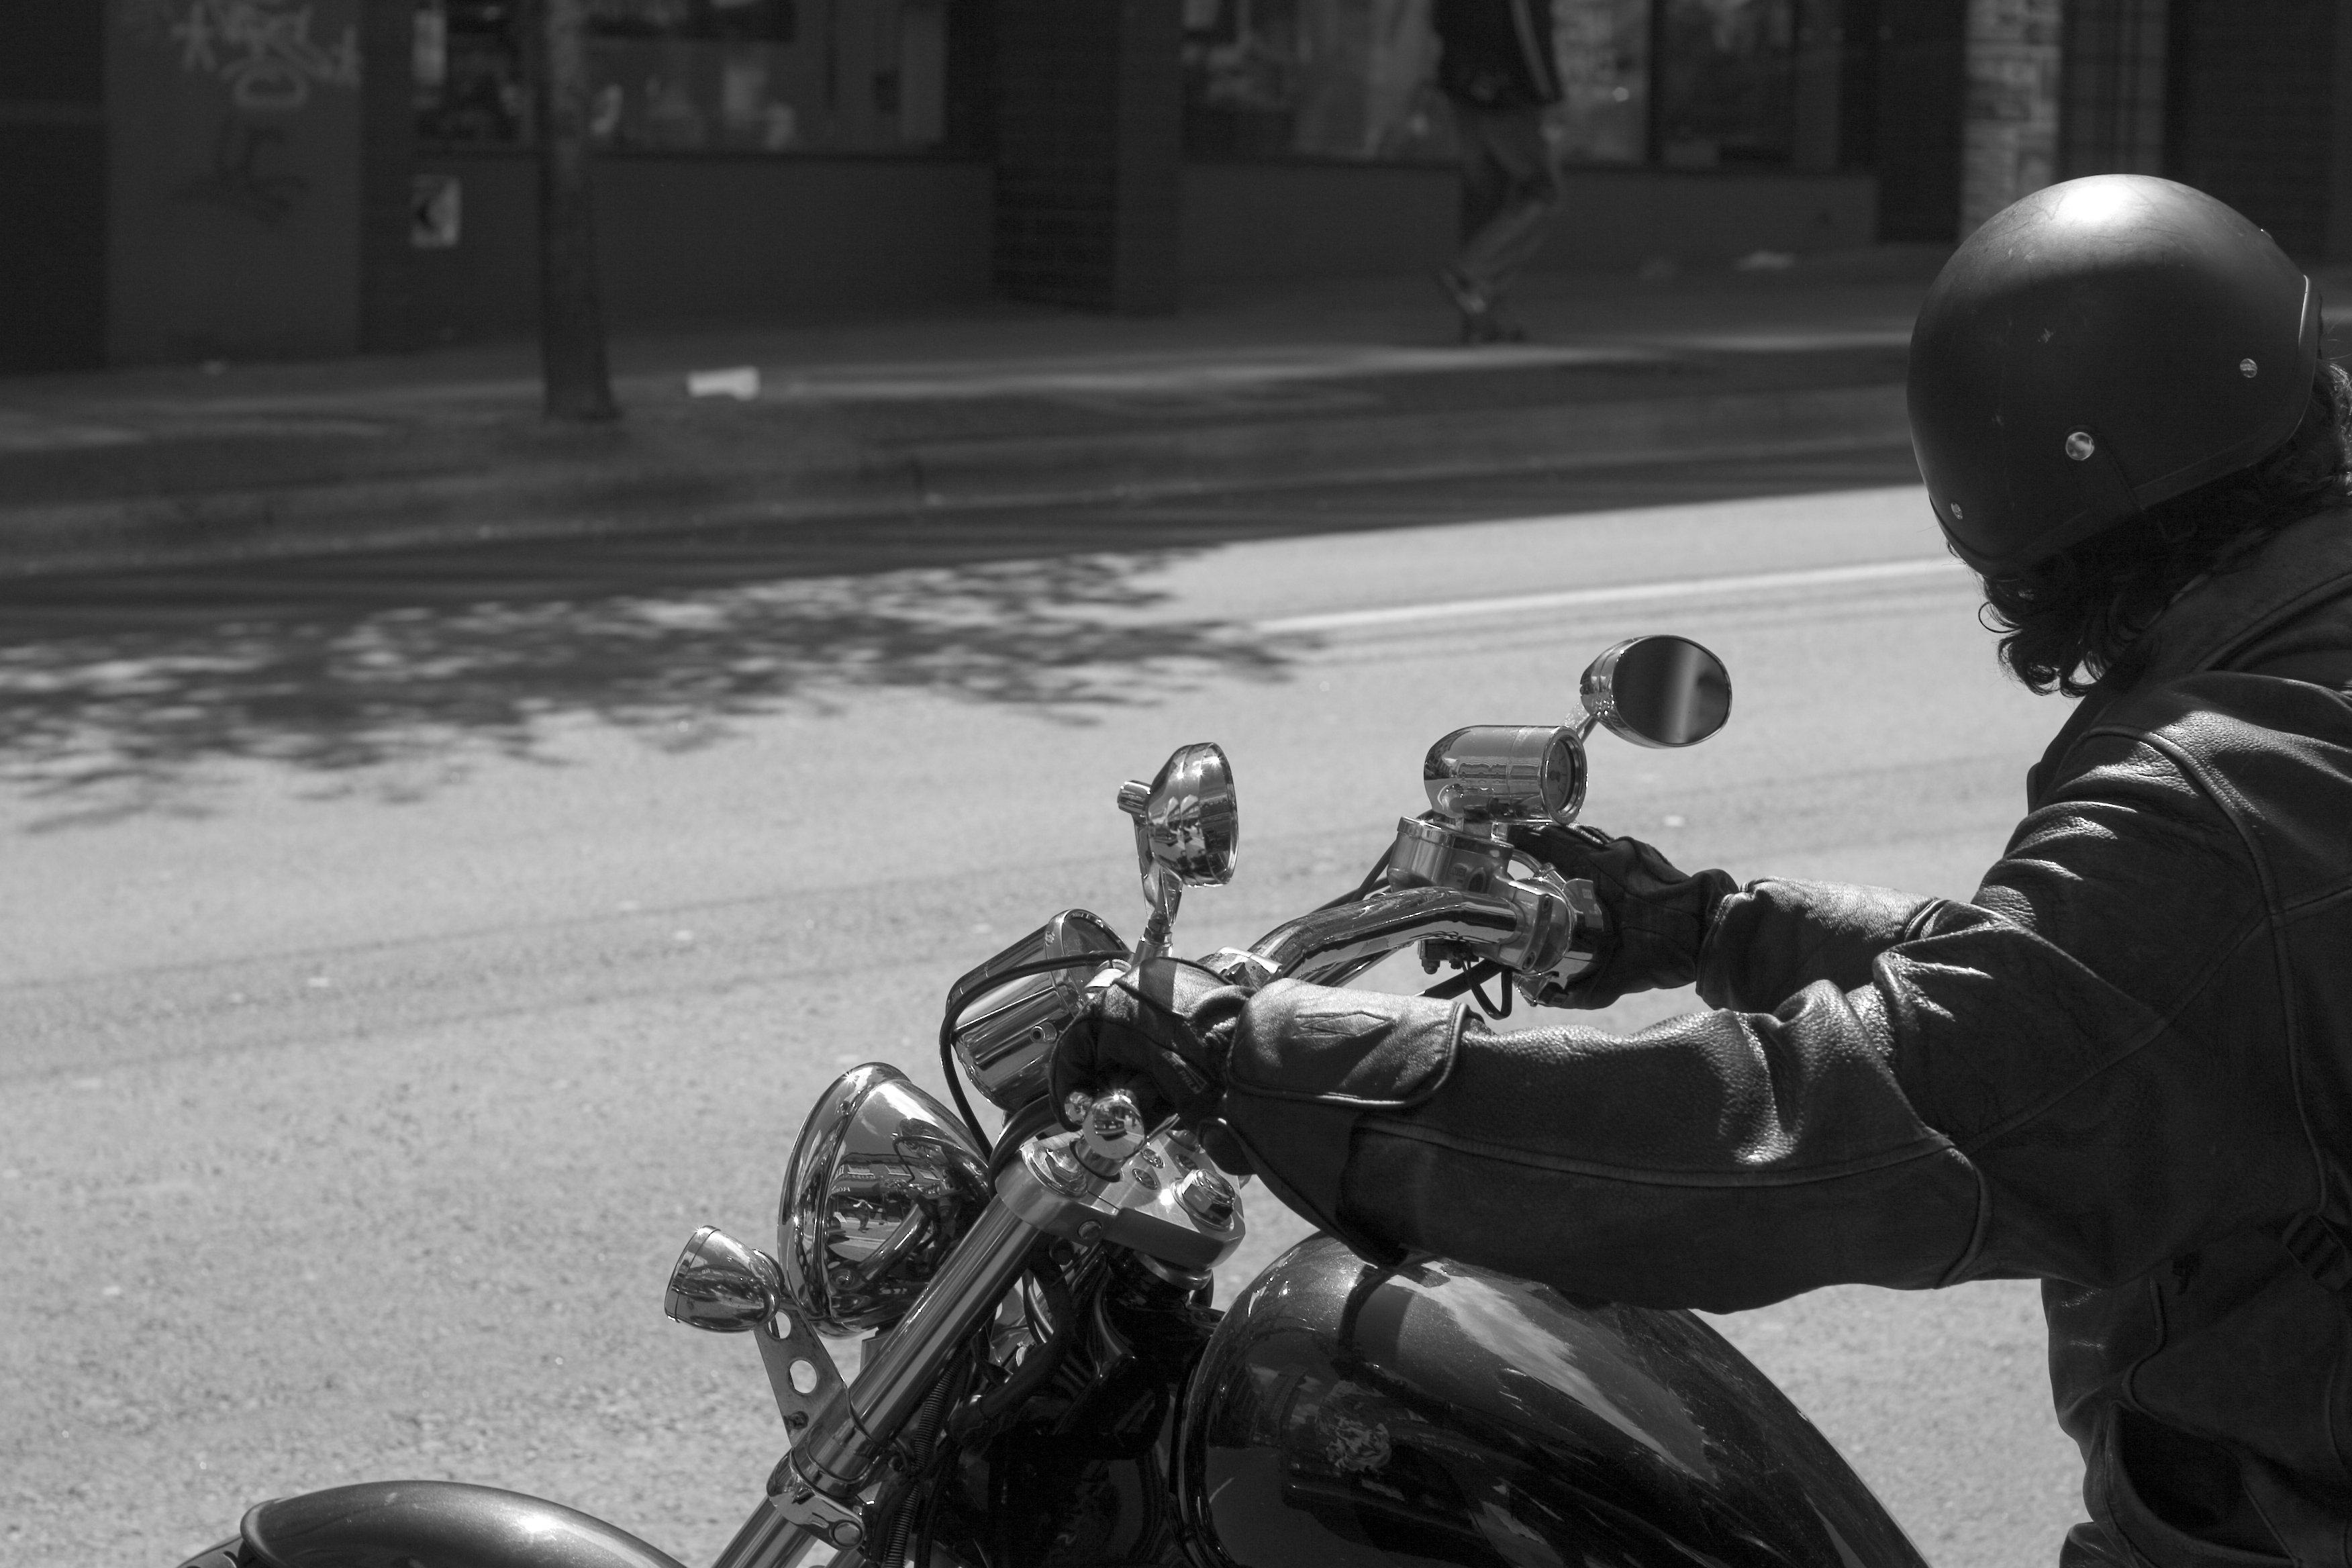 Michael fergusson's honda motorcycle - 11 photo